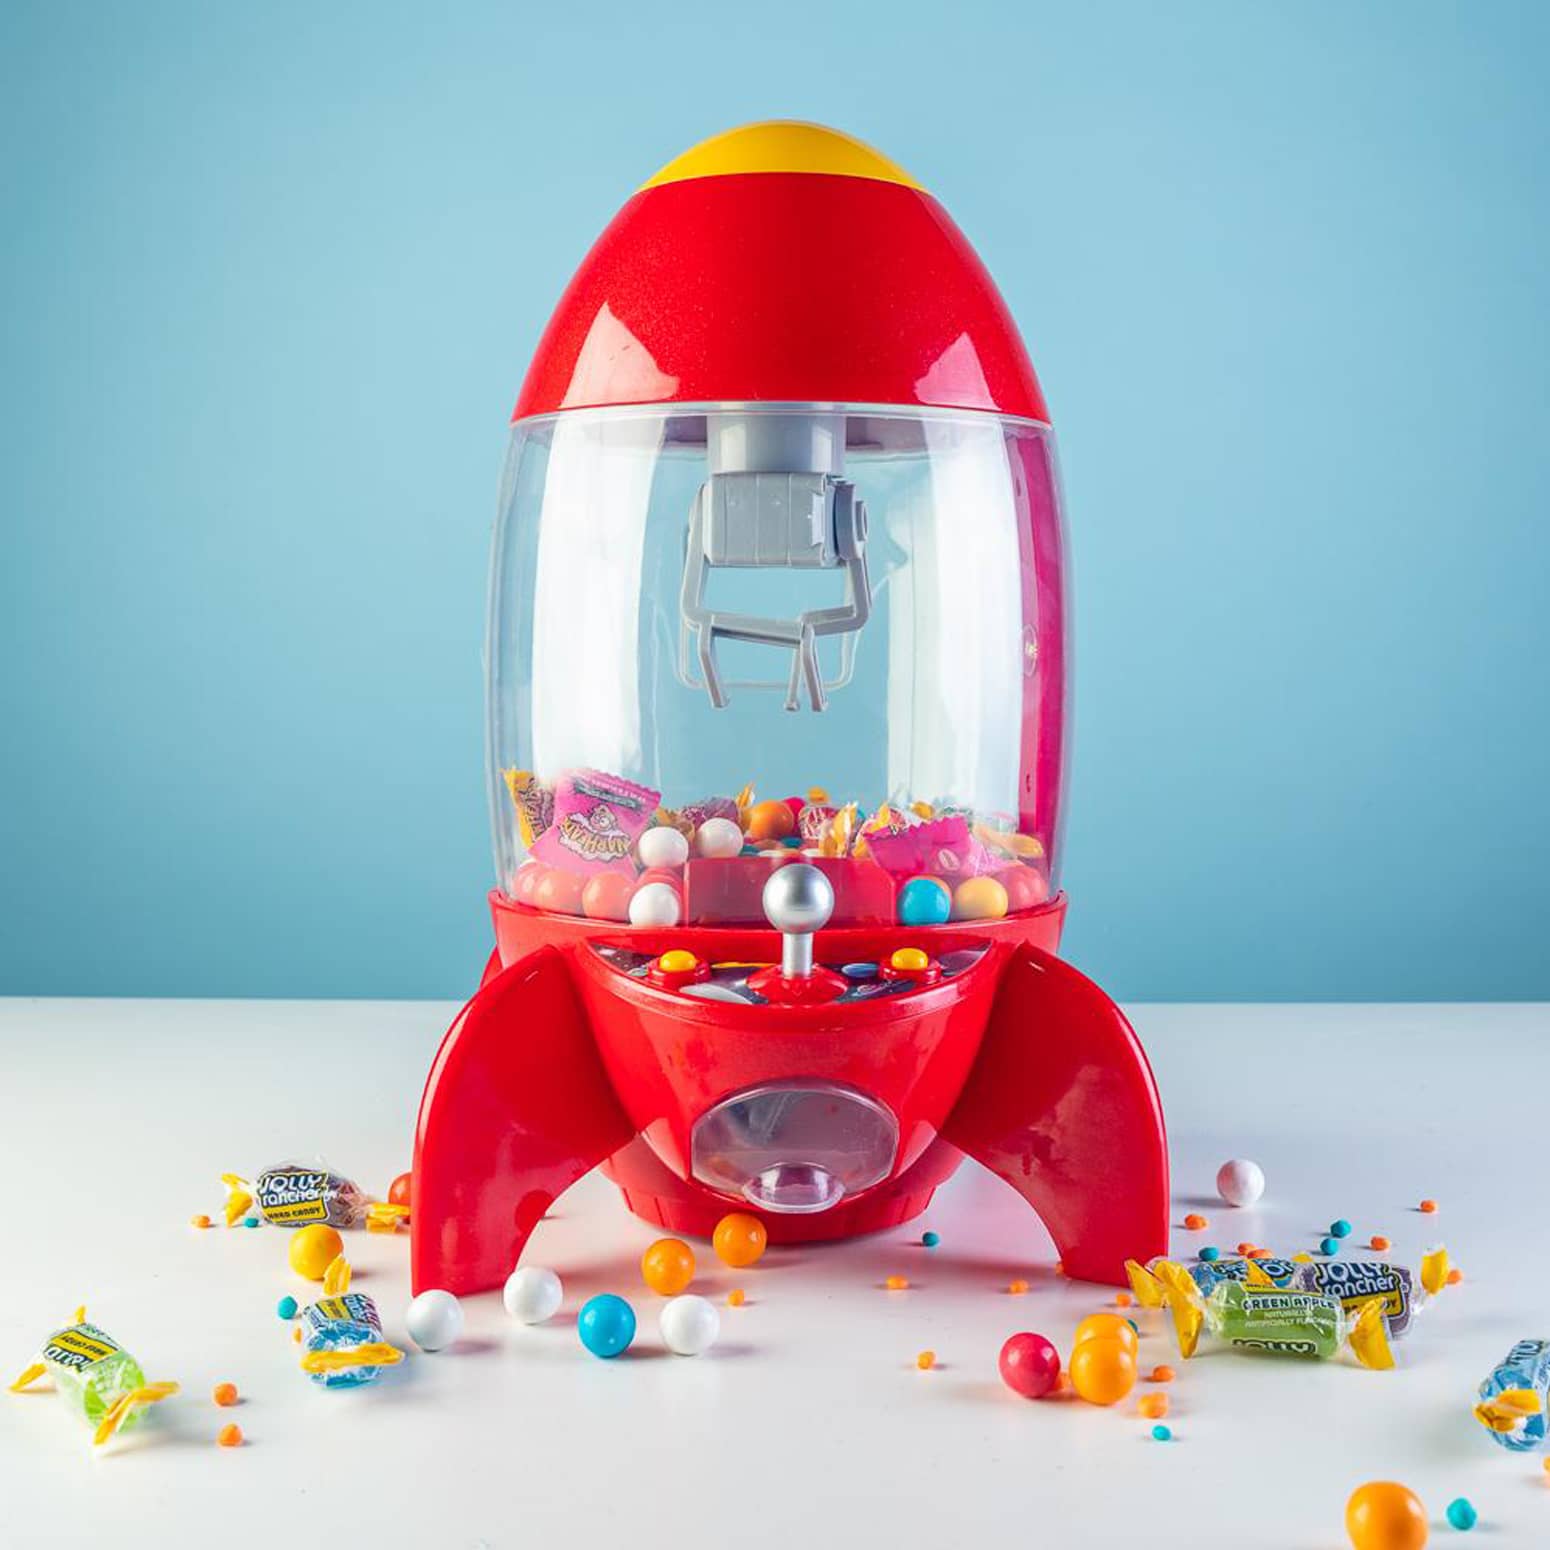 Rocket Ship Arcade Claw Machine Candy Grabber